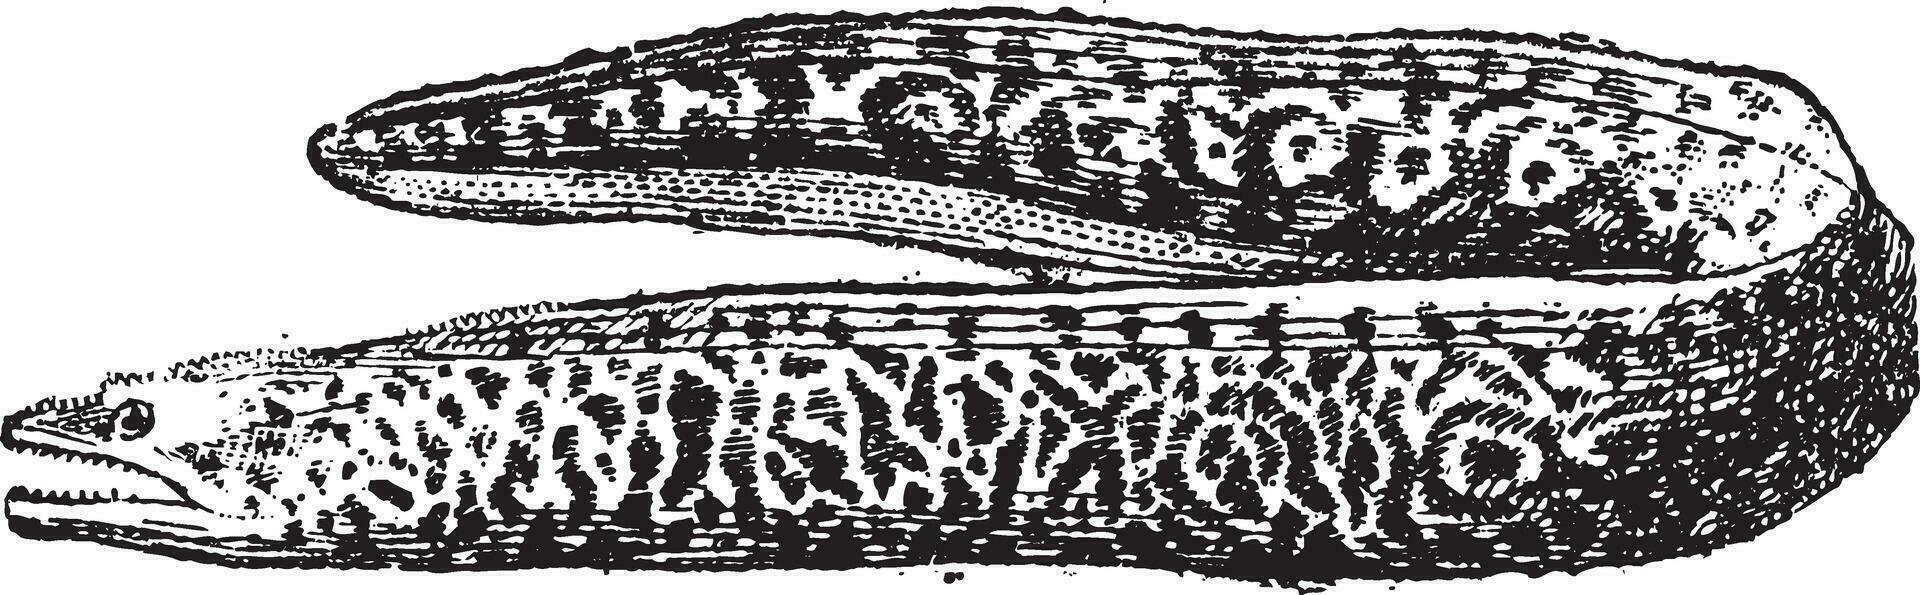 Muräne Aal oder muraenidae, Jahrgang Gravur vektor